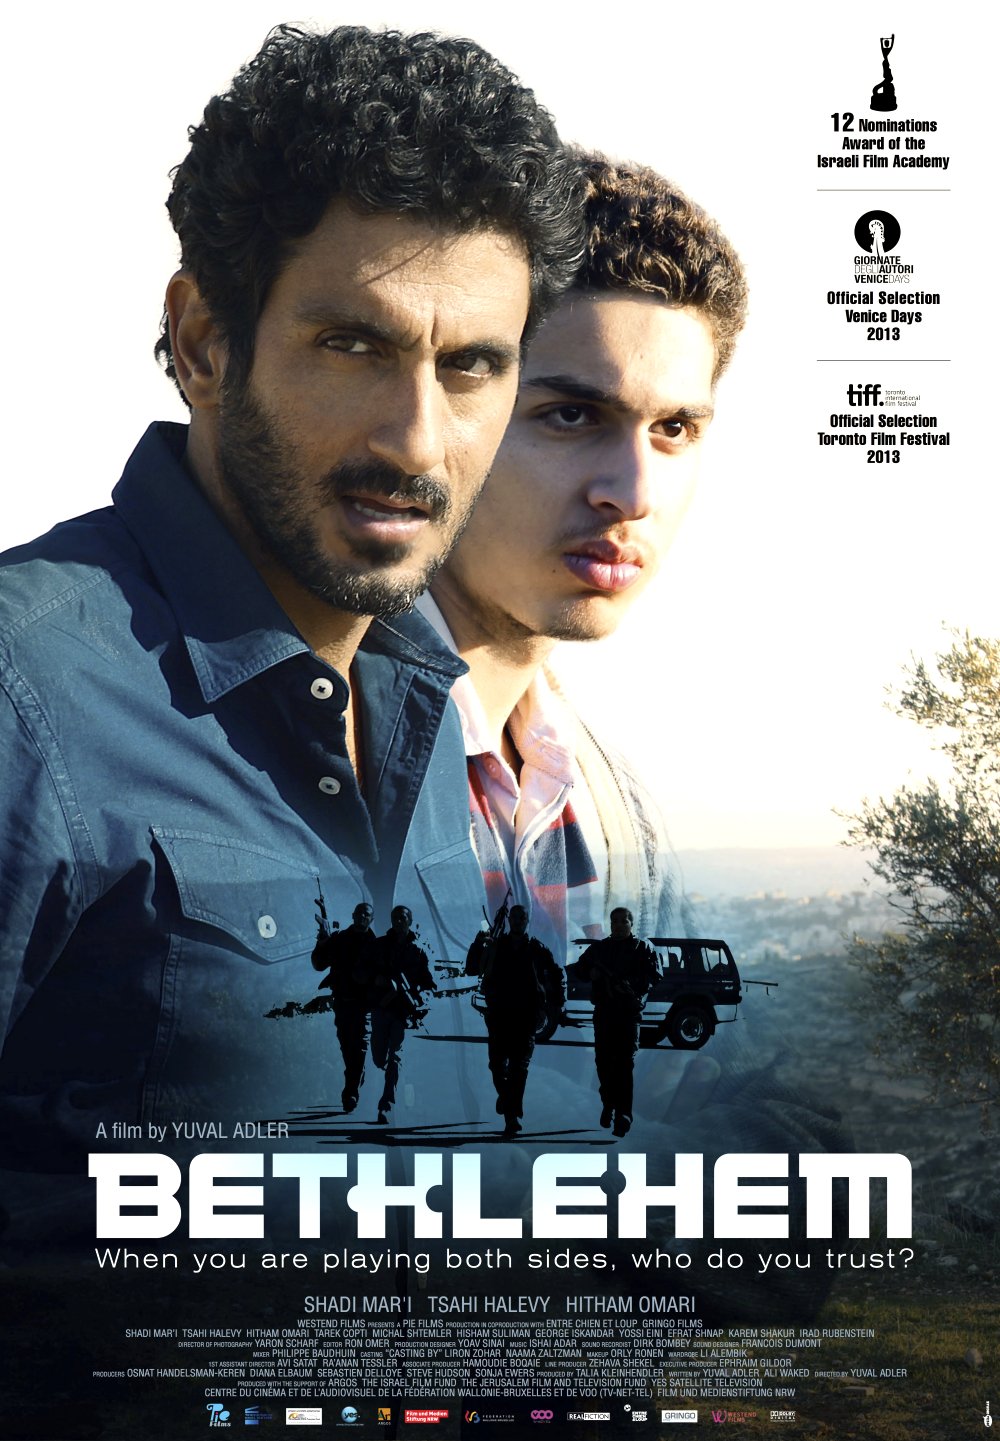 Bethlehem (2013) Movie Poster Google image from http://www.westendfilms.com/sites/default/files/posters/betlehem_poster_final.jpg